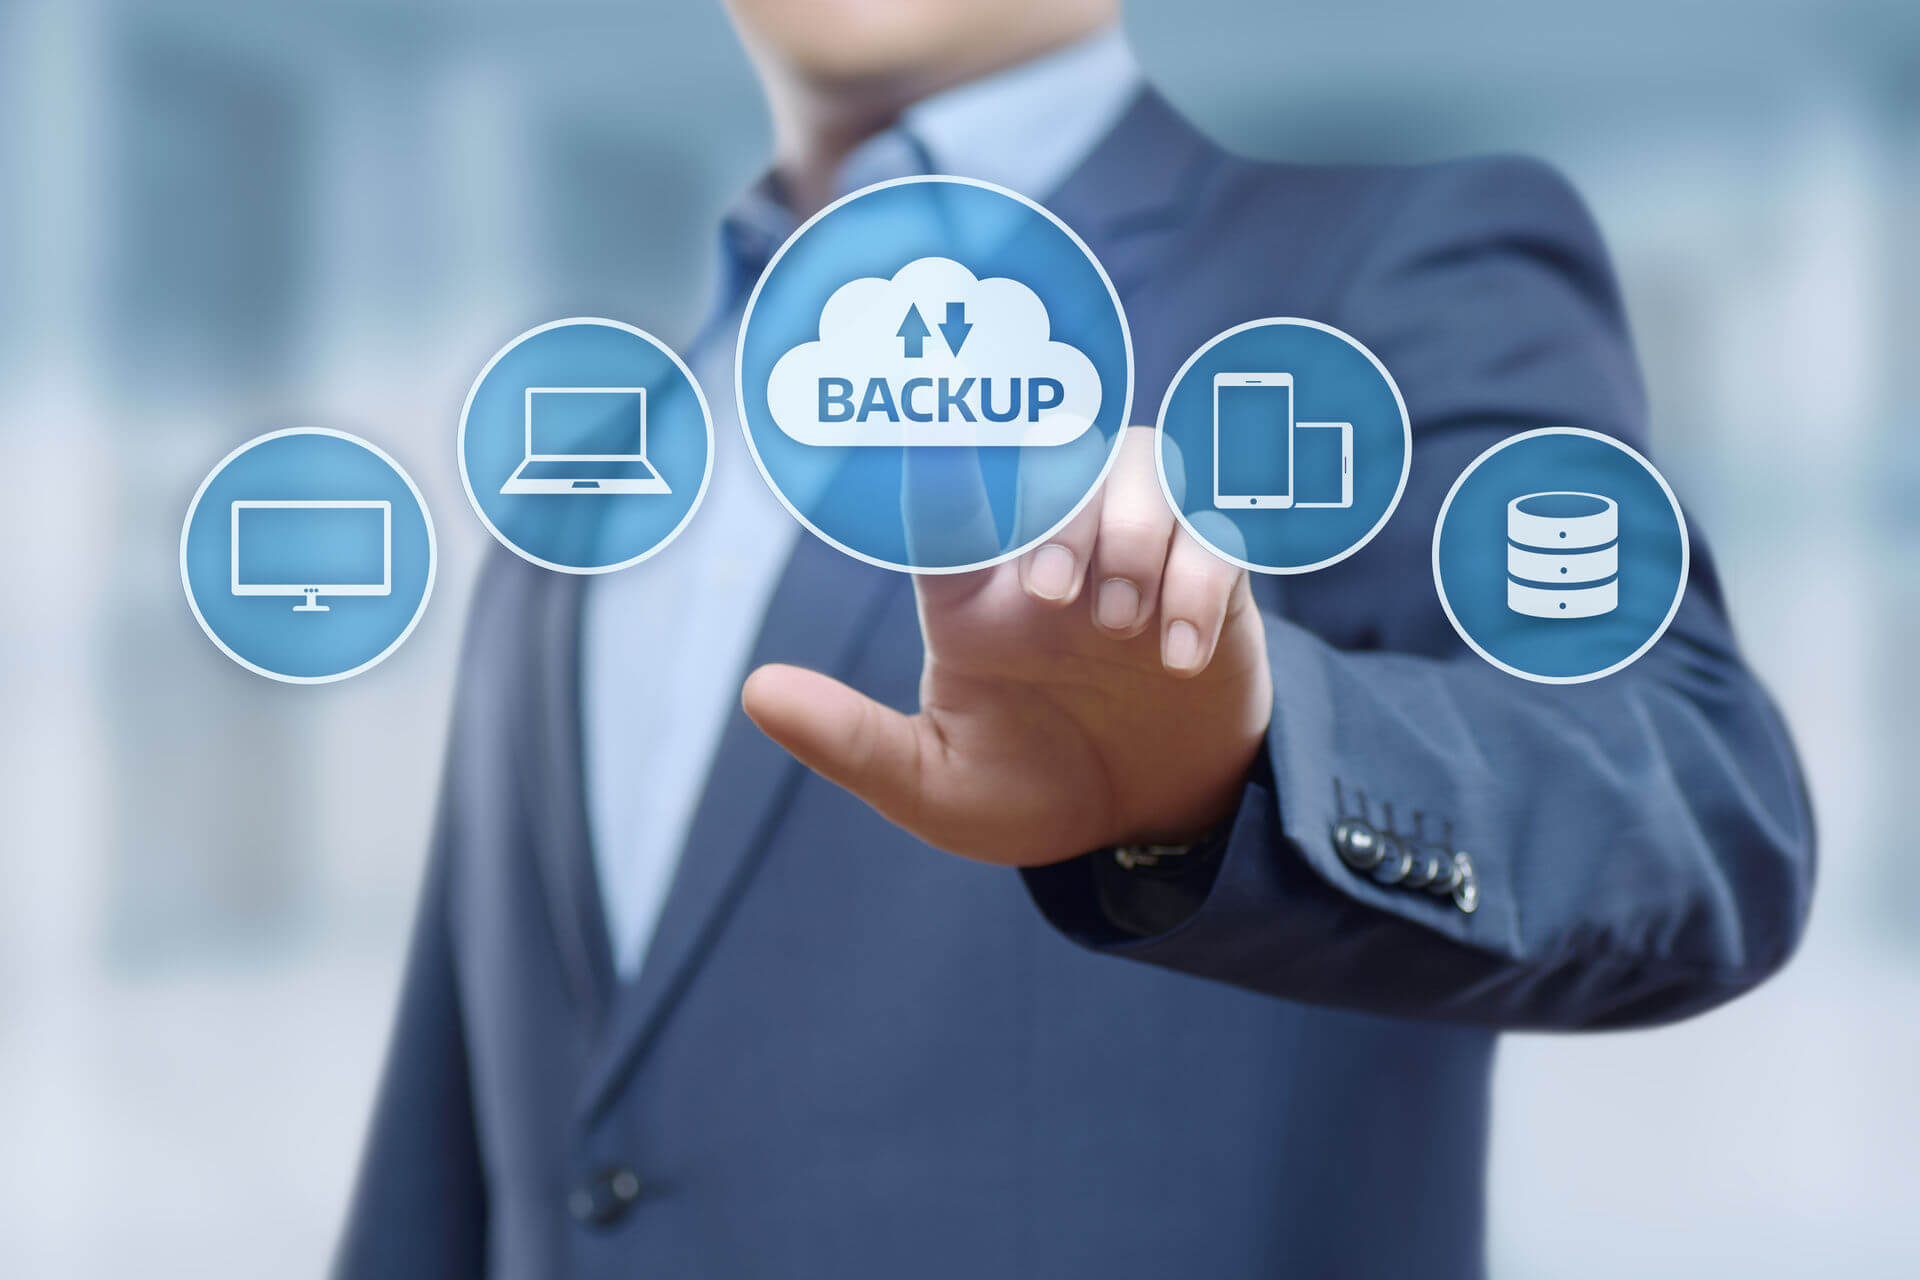 enterprise data backup hardware solutions